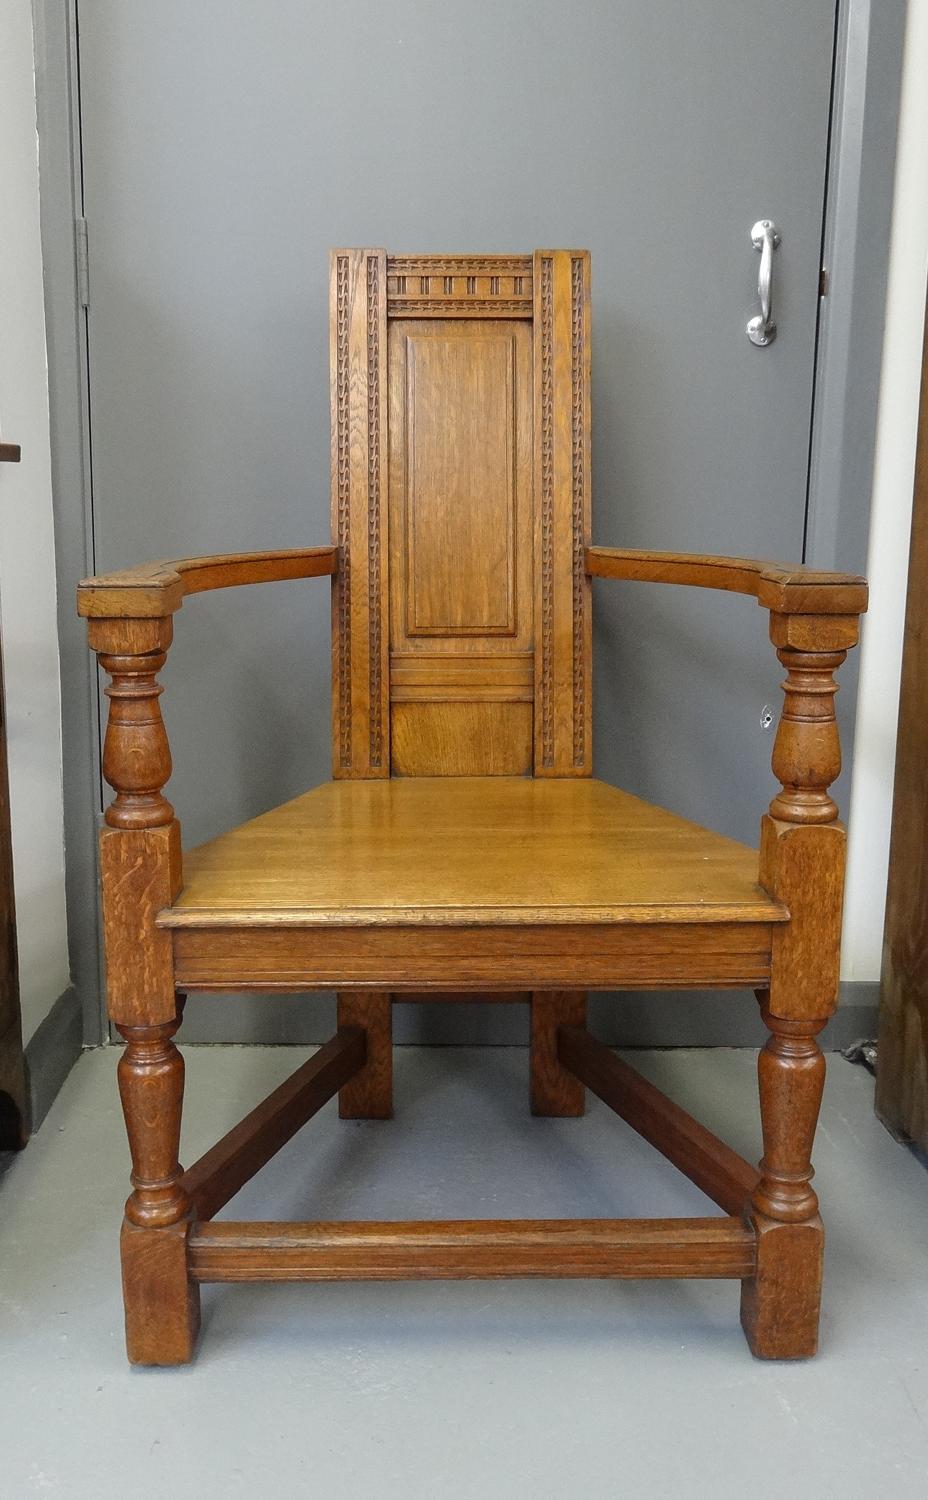 Extremely rare EW Godwin Shakespeare oak armchair